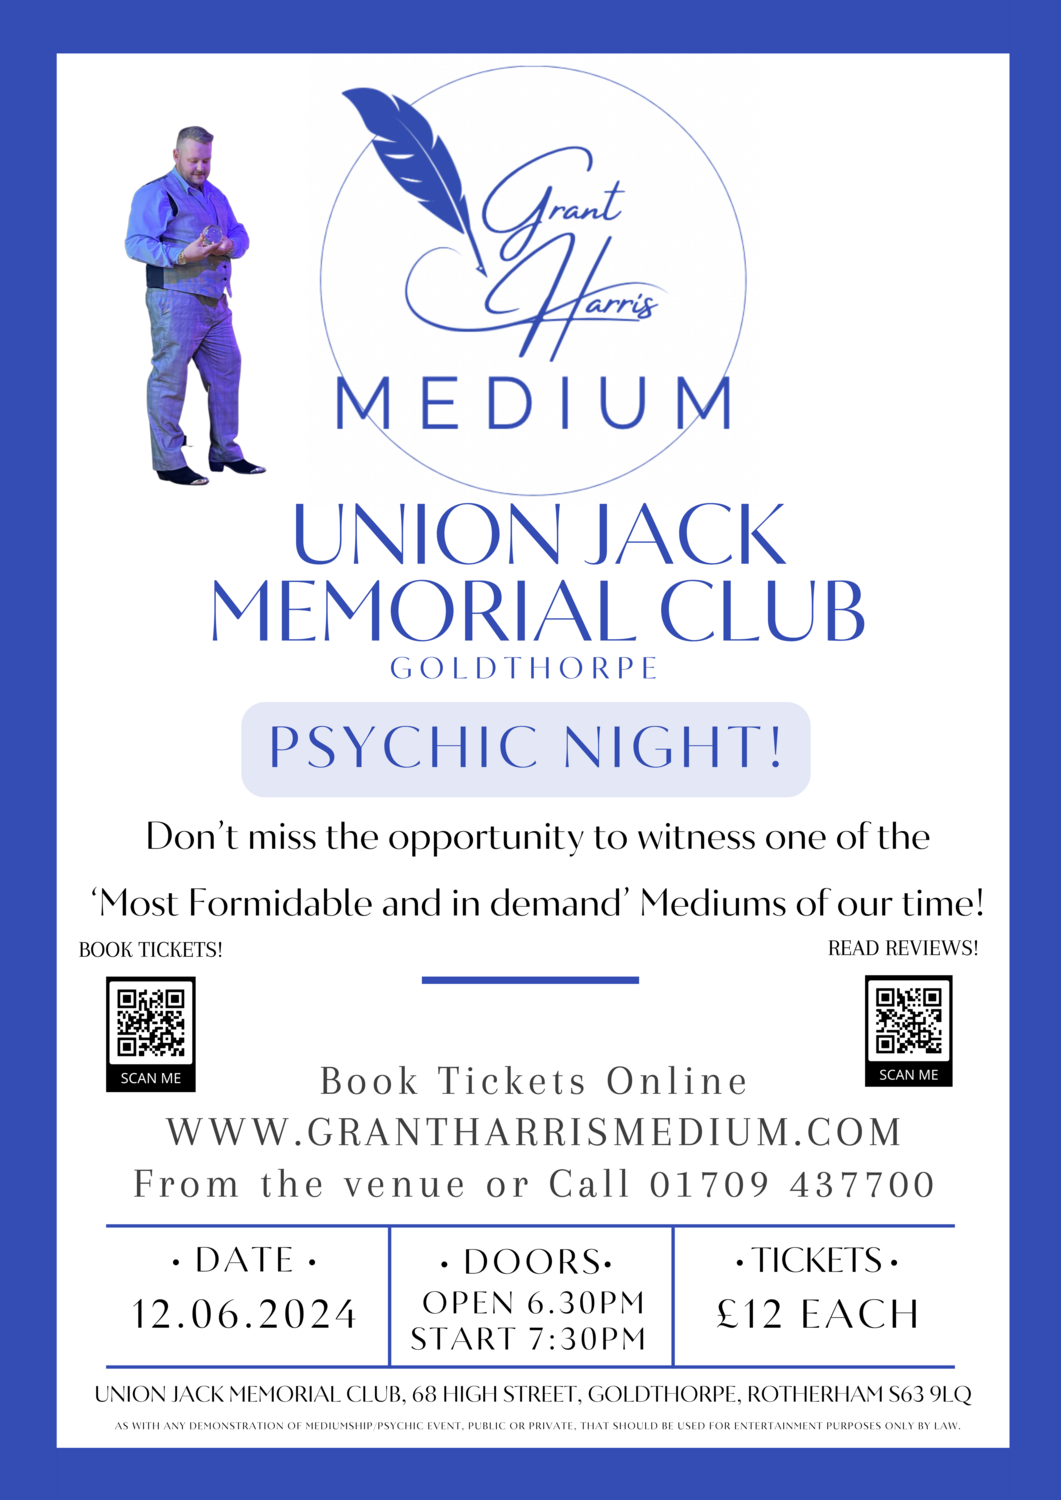 Psychic Night | Union Jack Memorial Club, Goldthorpe, Wed 12th June 2024